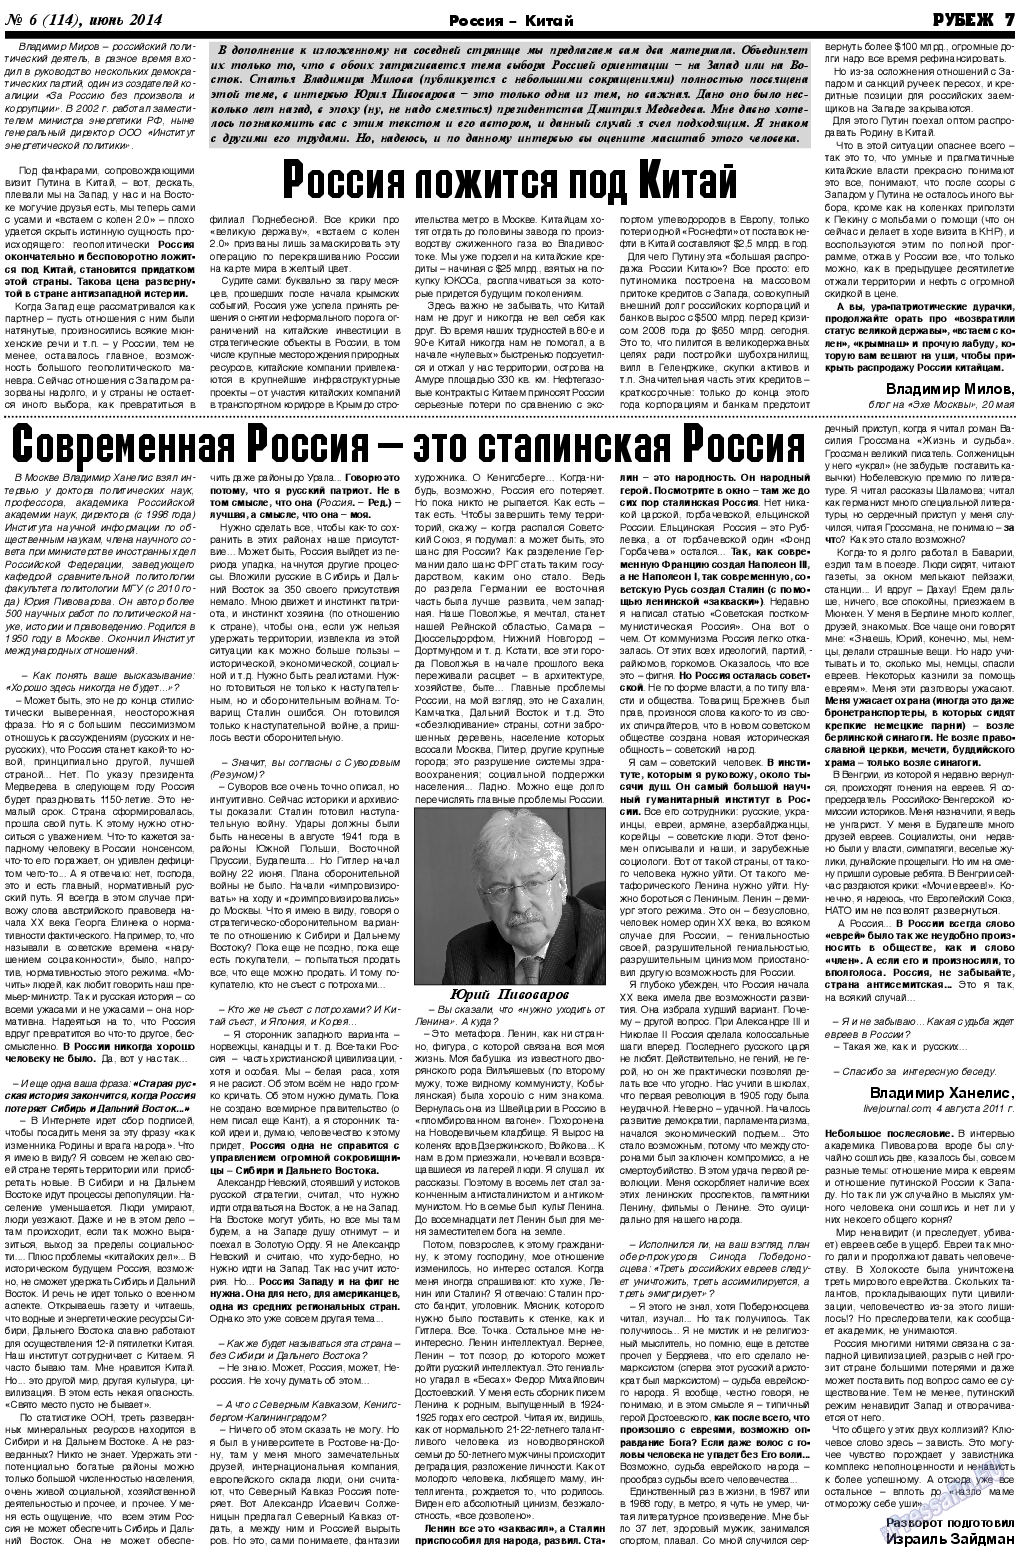 Рубеж, газета. 2014 №6 стр.7